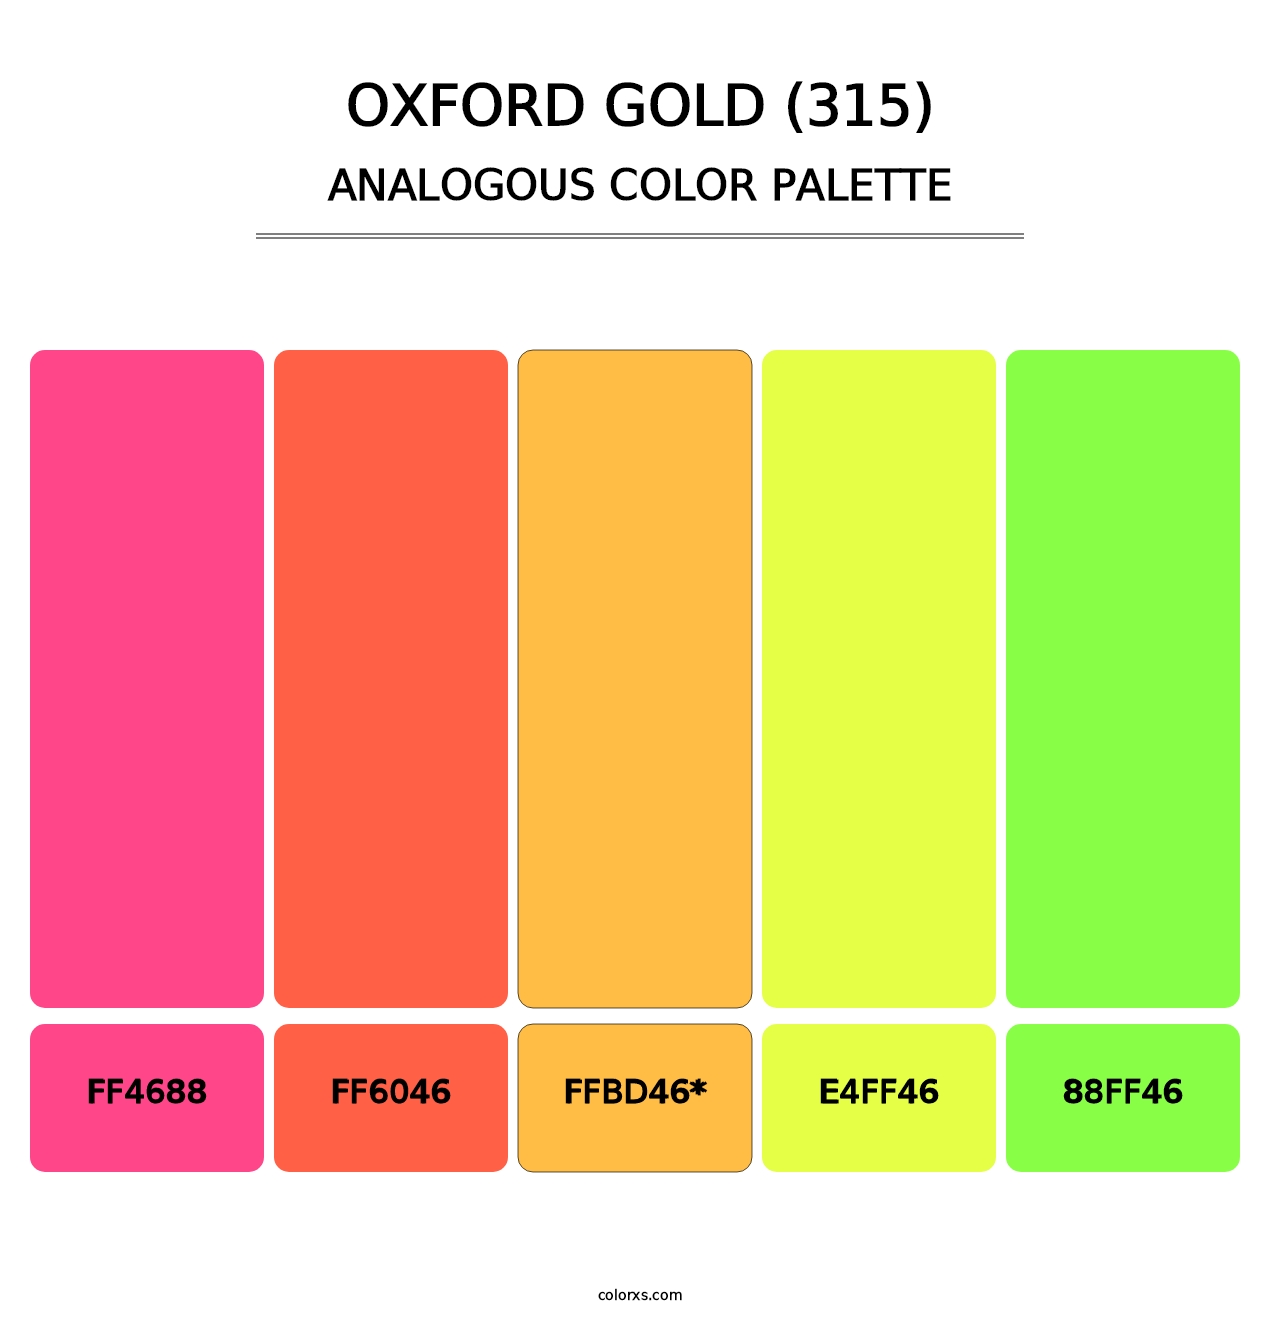 Oxford Gold (315) - Analogous Color Palette